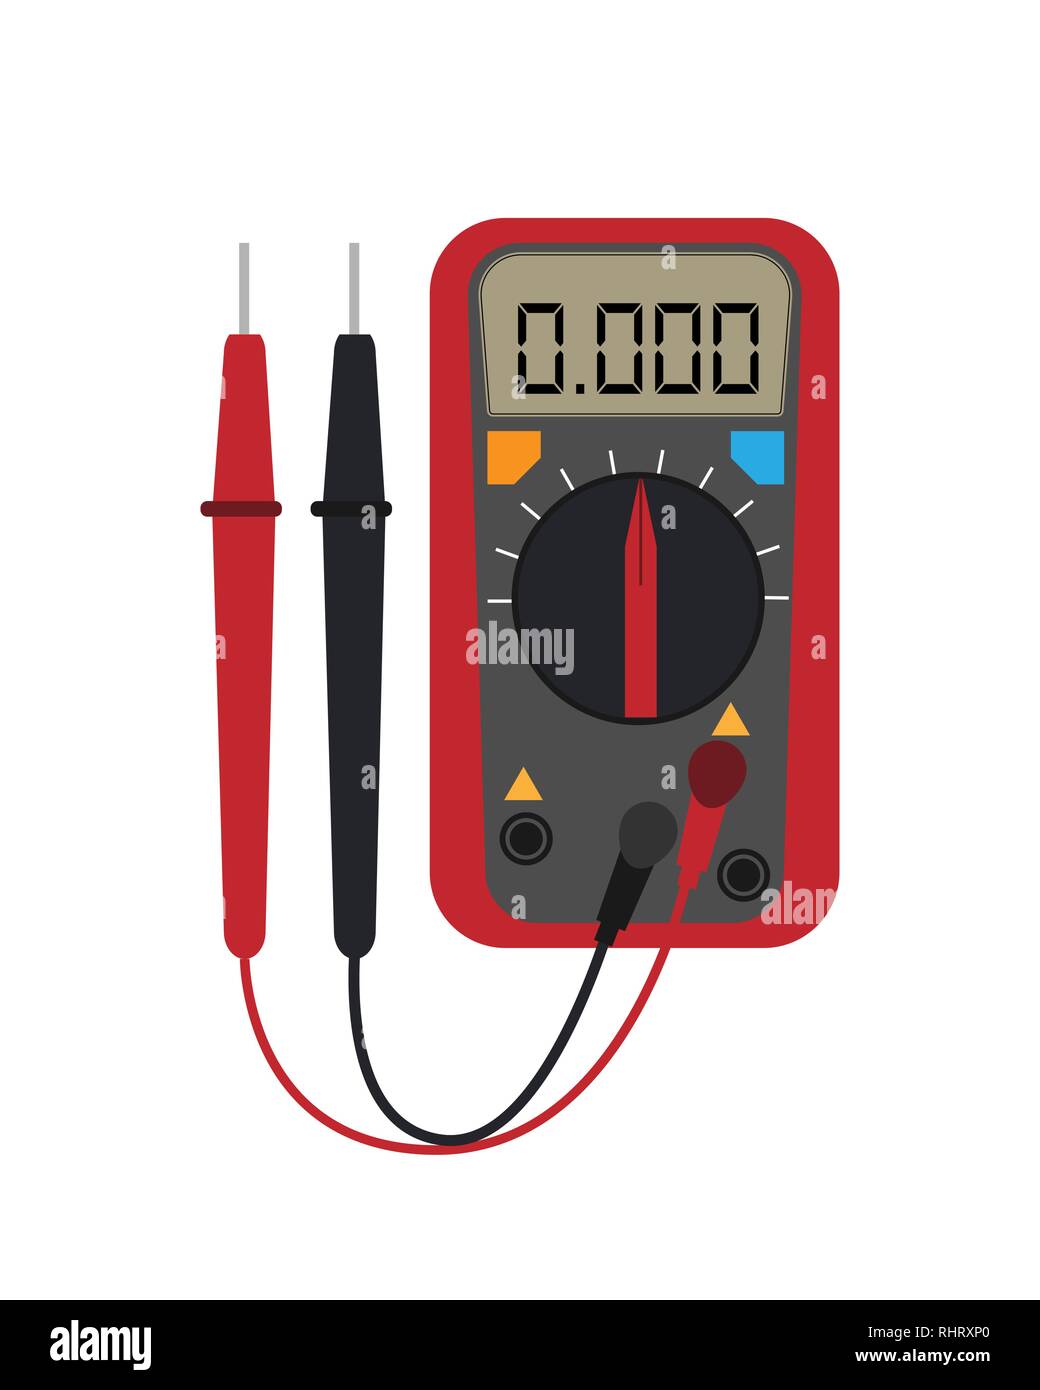 Digital multimeter. Electrical measuring instrument: voltage, amperage, ohmmeter, power. Flat style, vector illustration Stock Vector